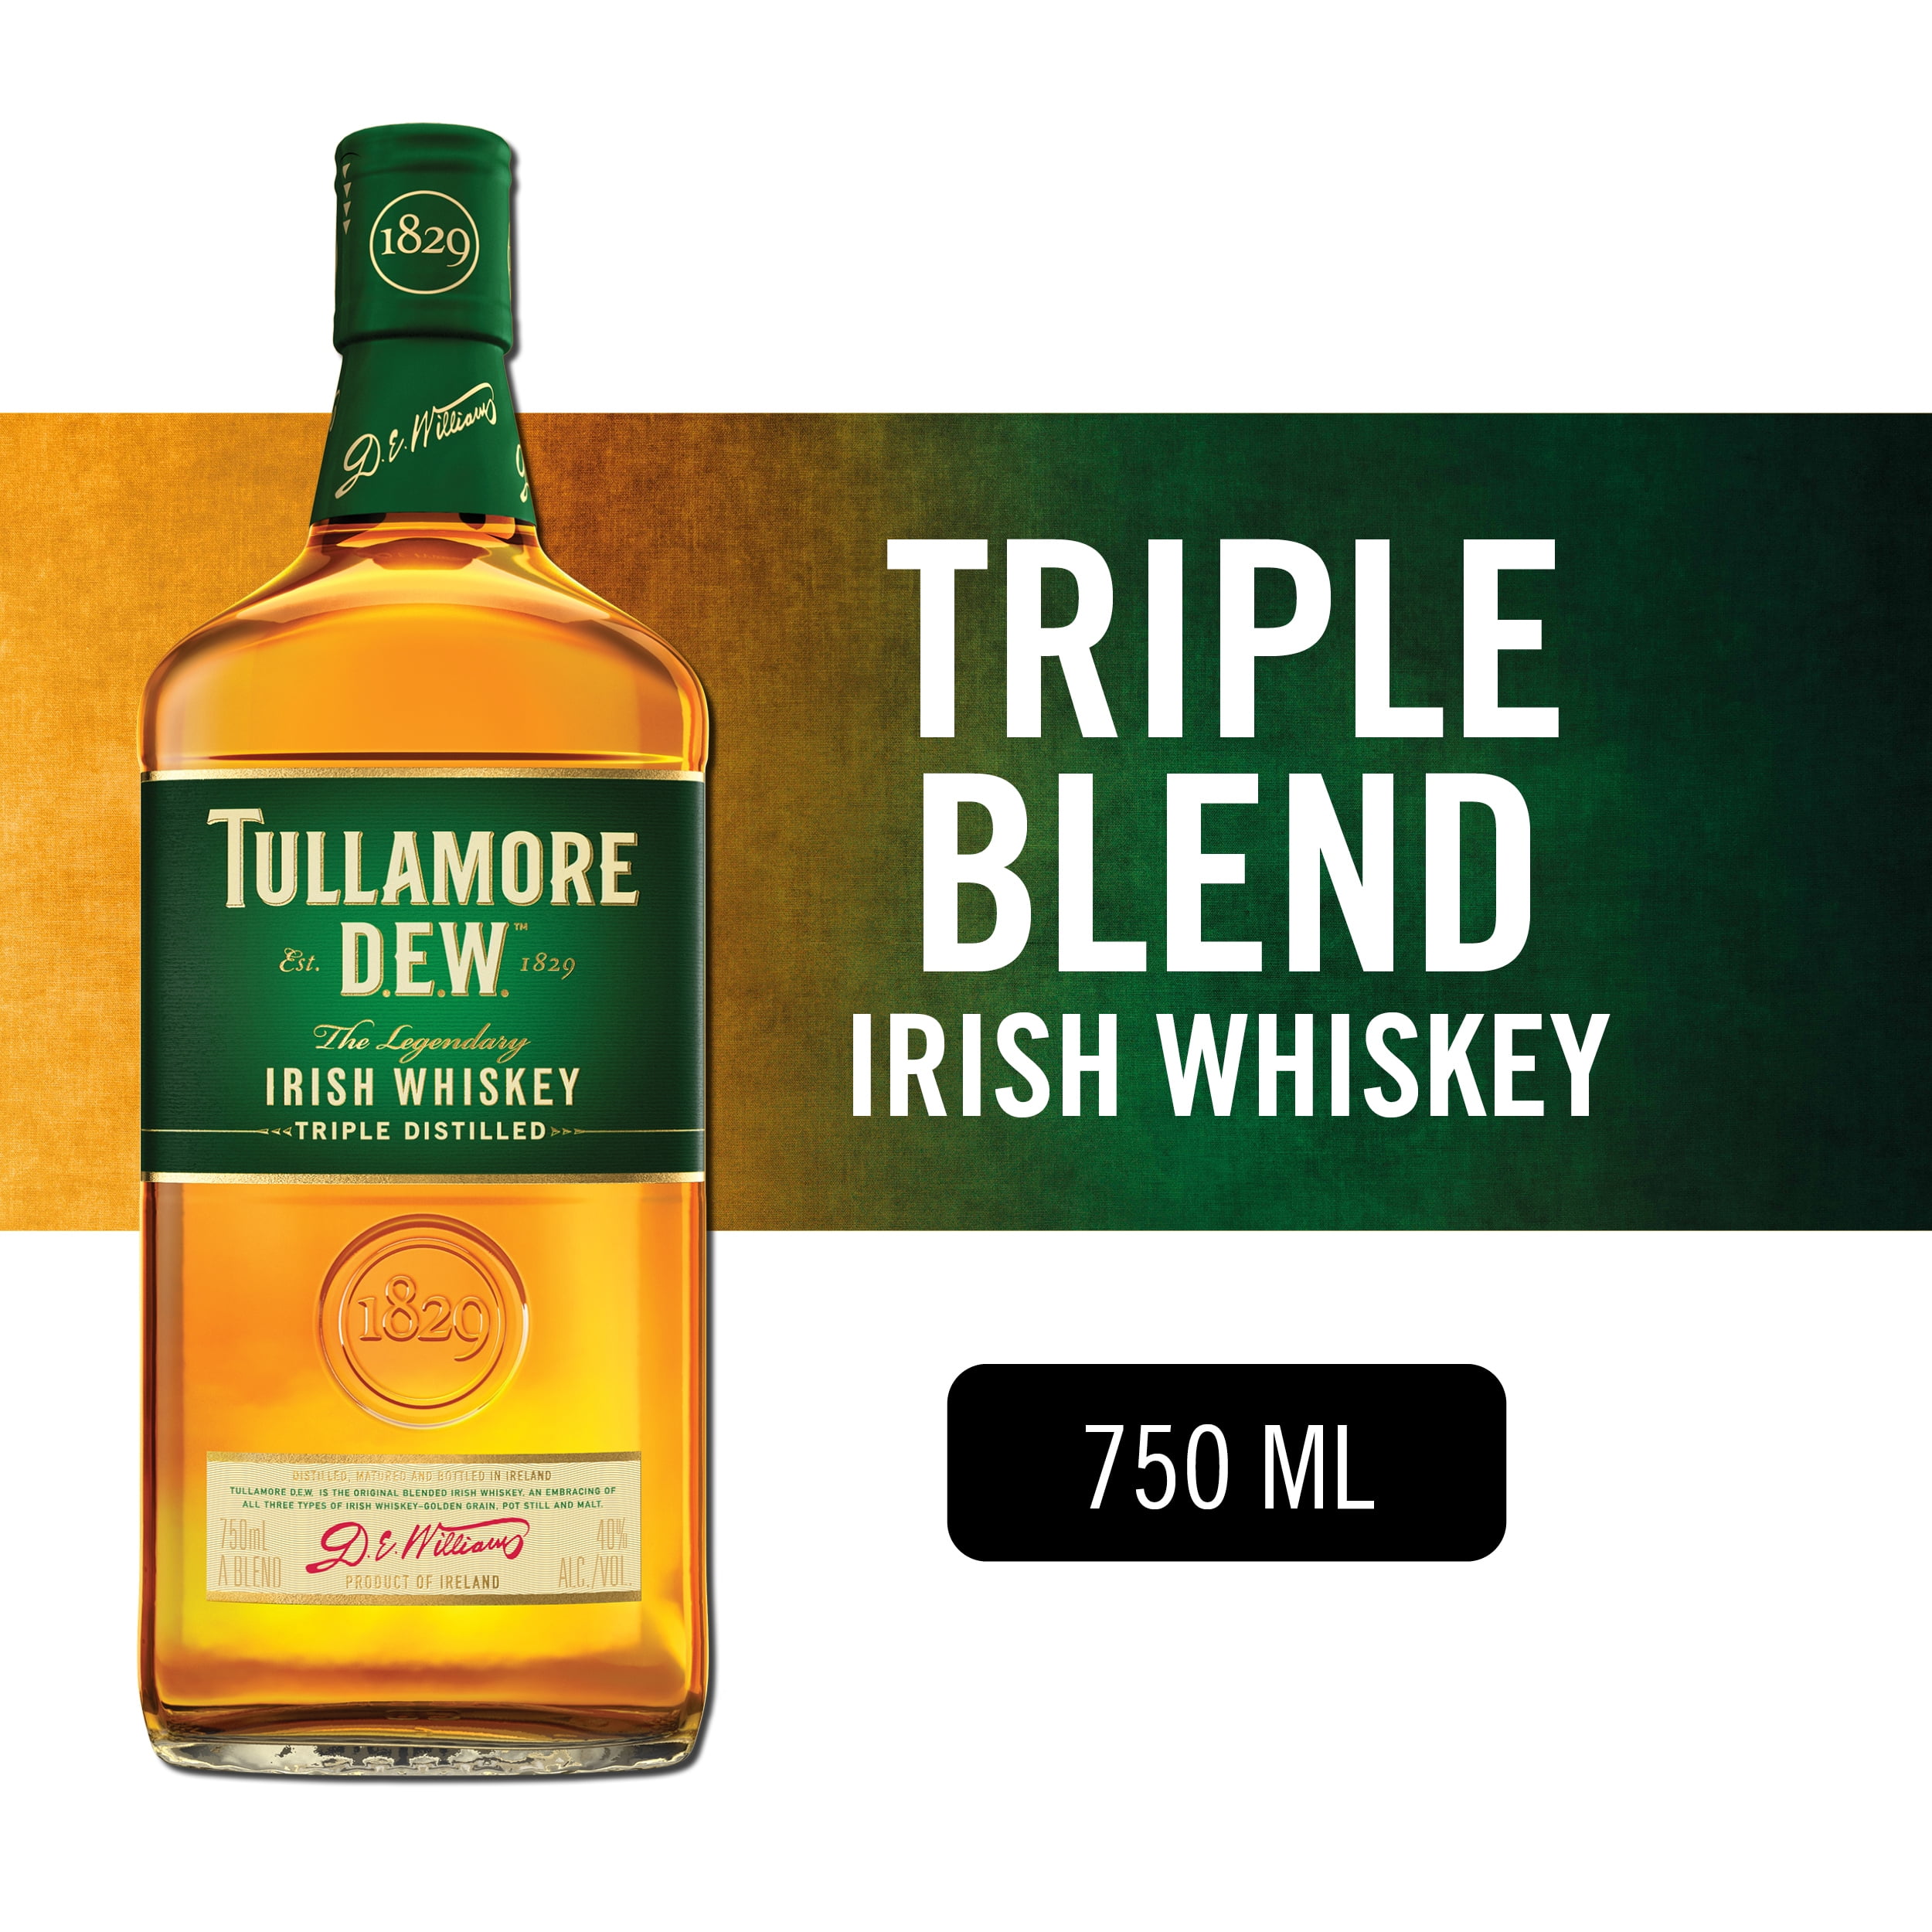 Tullamore Dew 1. Виски Талмор Дью. Tullamore Dew 1 литр. Виски Tullamore Dew, 1 л. Tullamore dew 0.7 цена